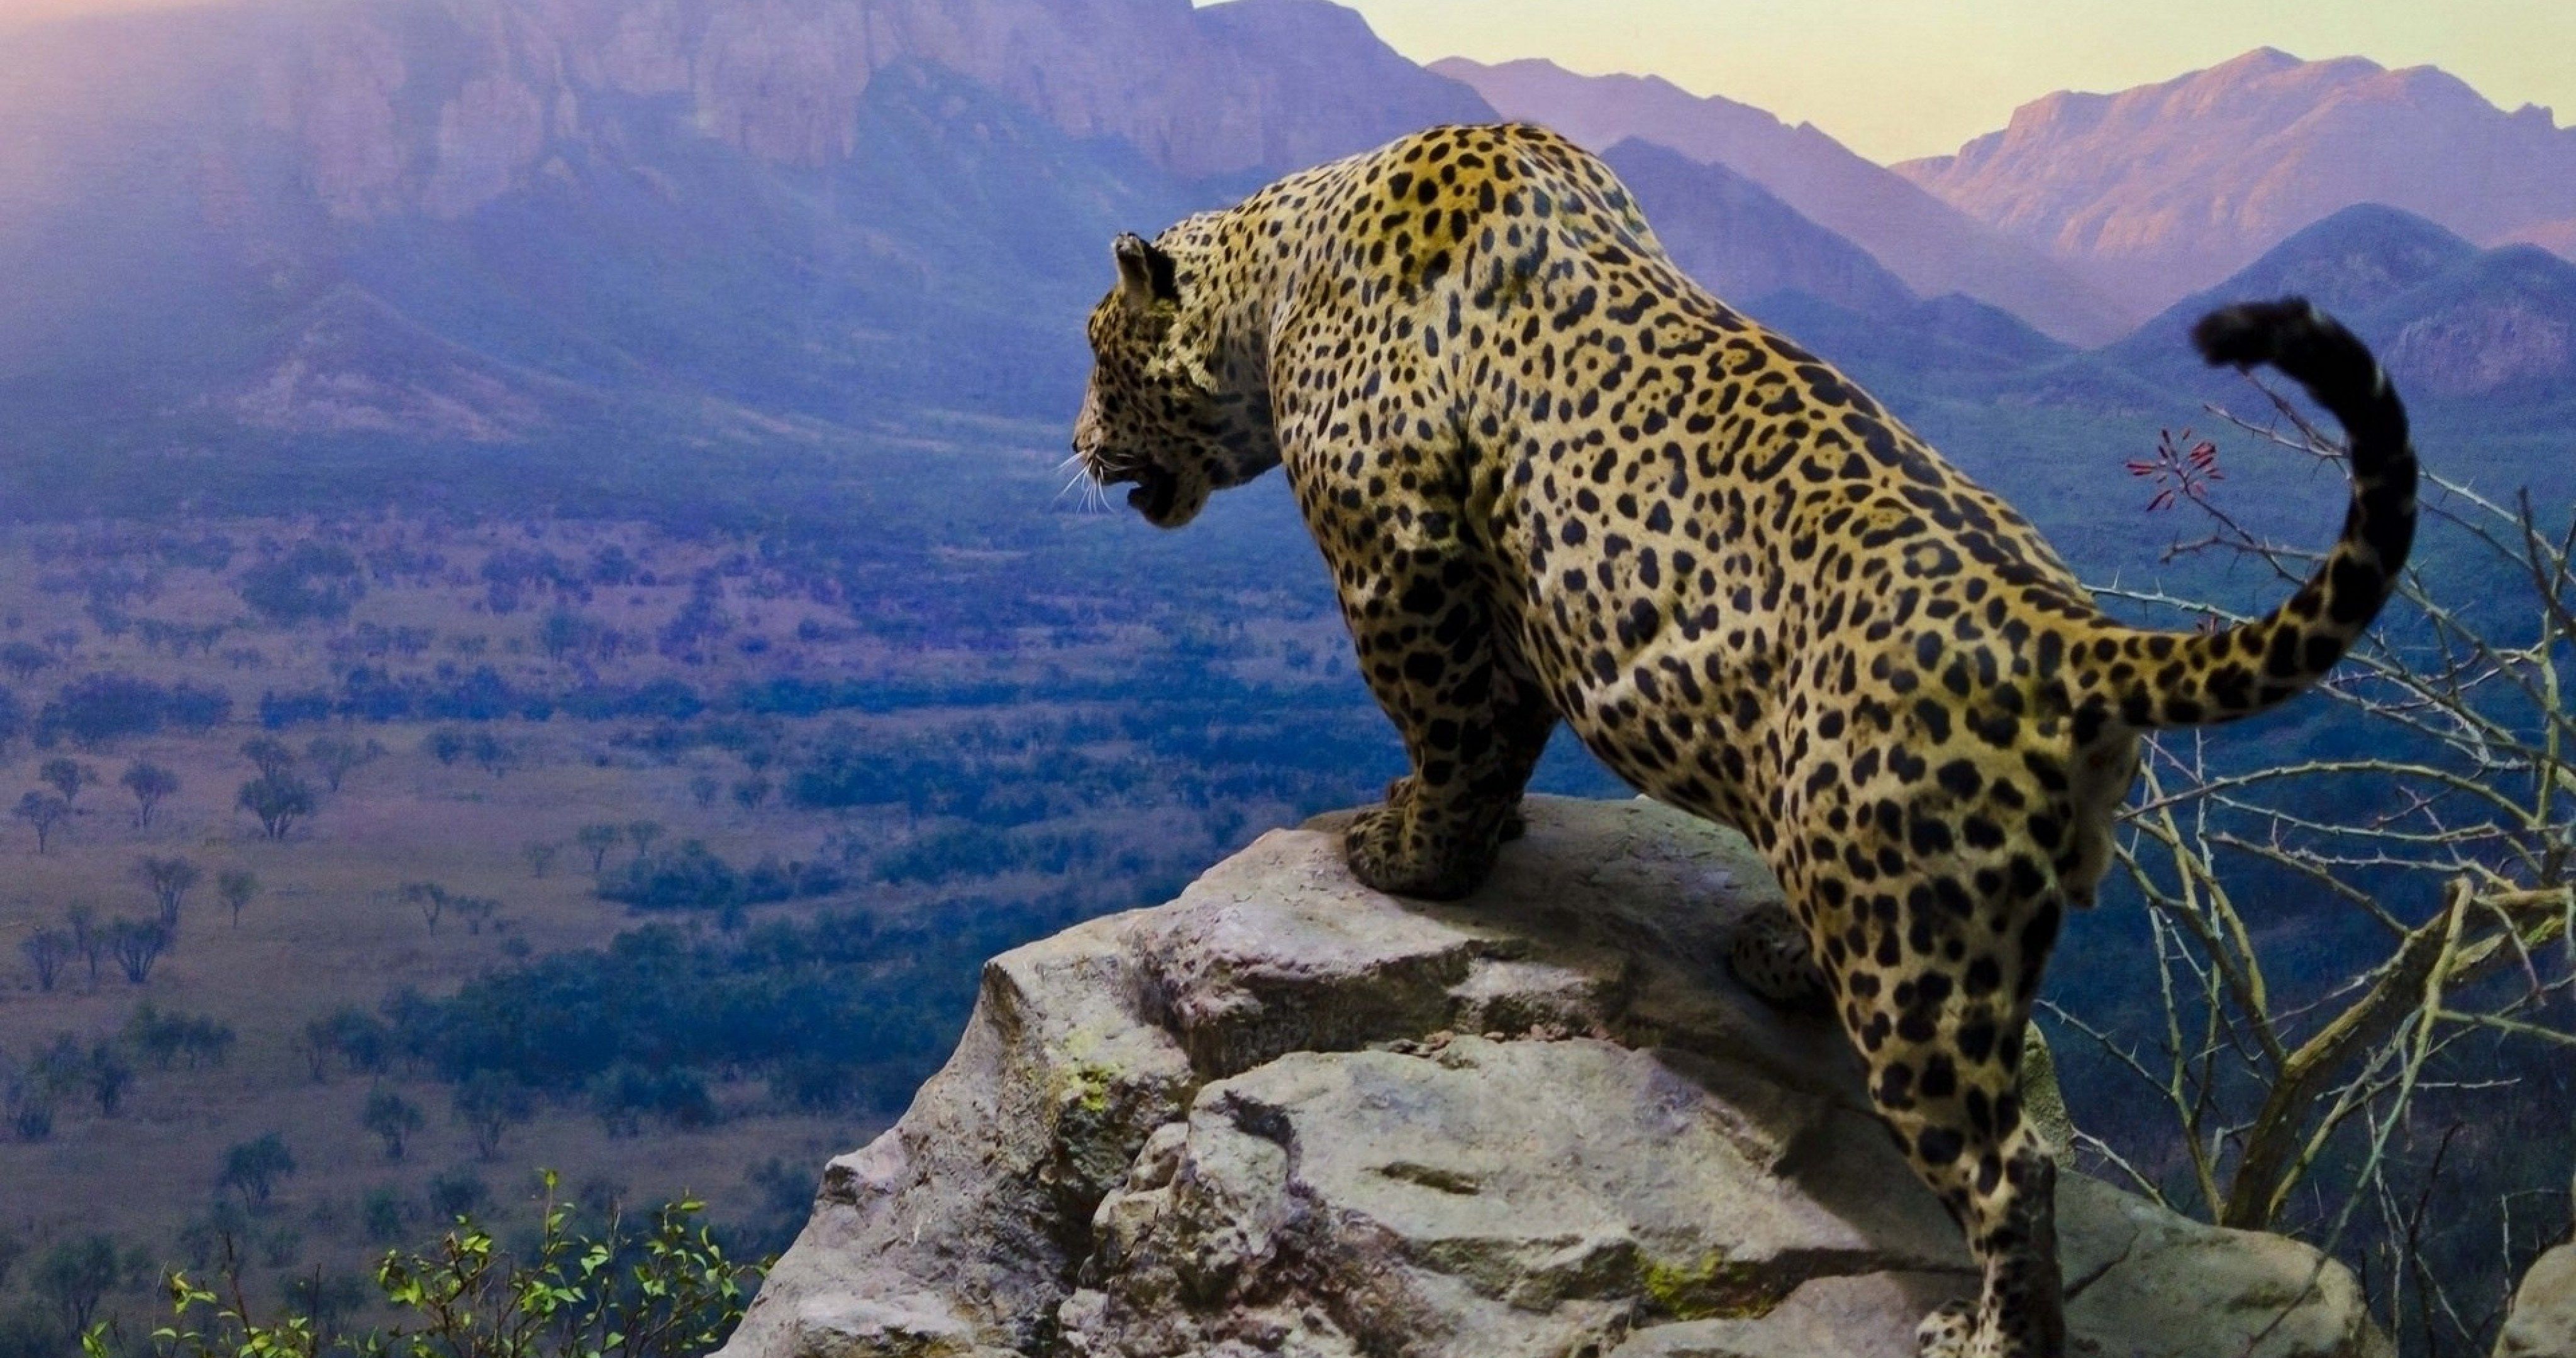 jaguar in mountains 4k ultra HD wallpaper High quality walls